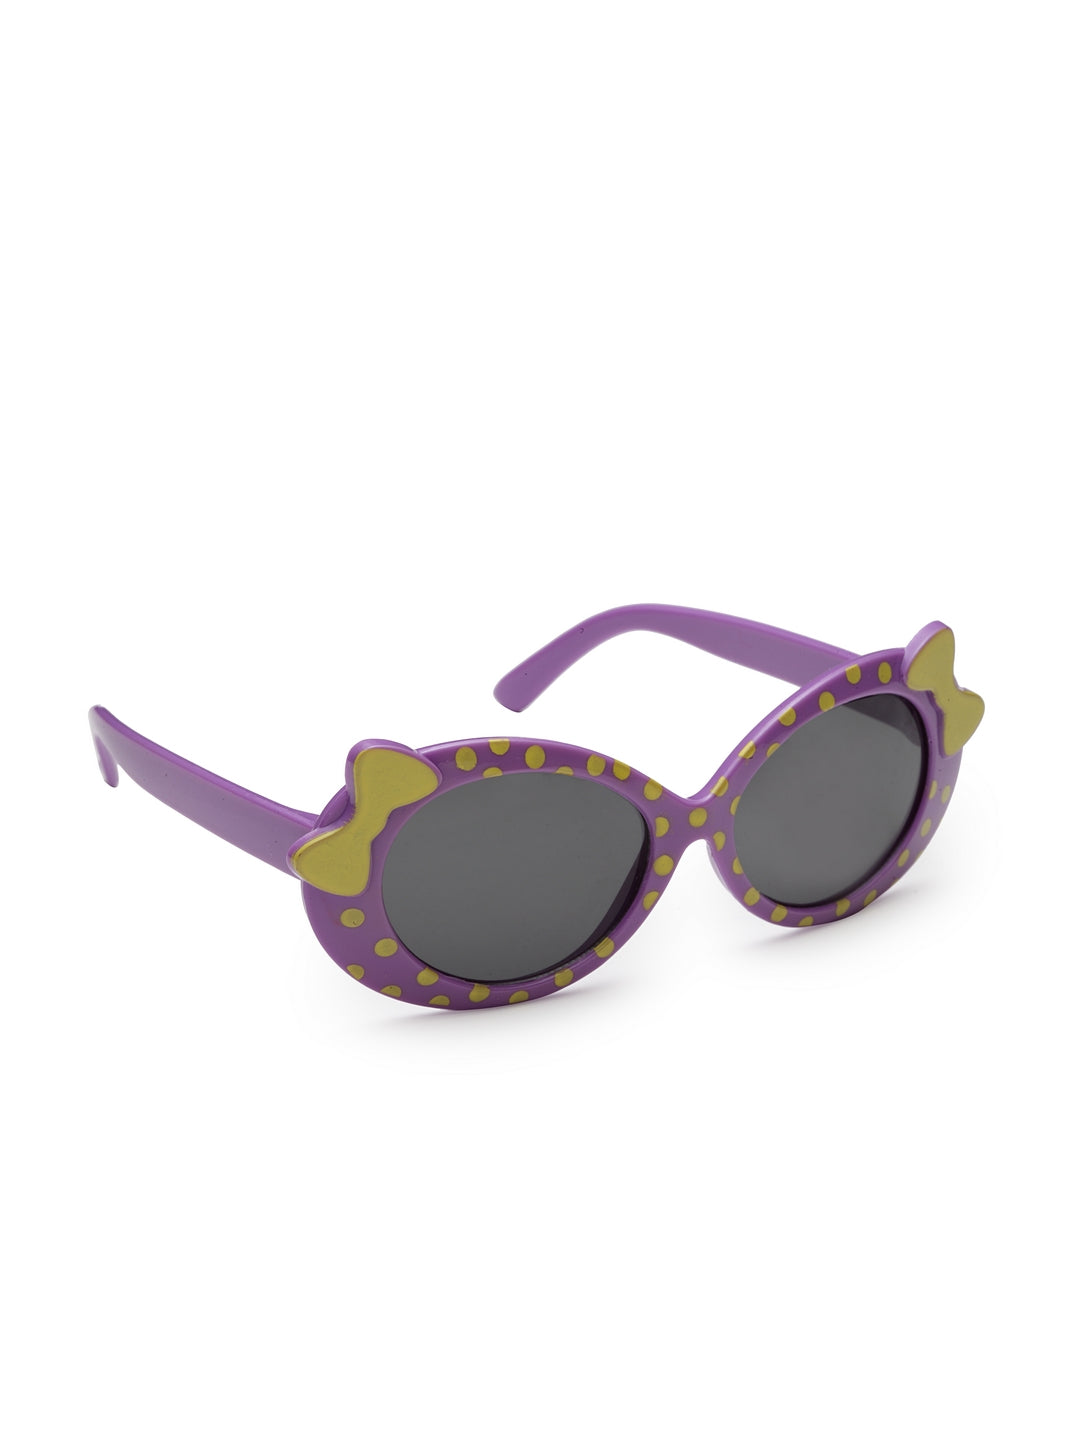 Stol'n Premium Attractive Fashionable UV-Protected Cat Eye Sunglasses - Purple